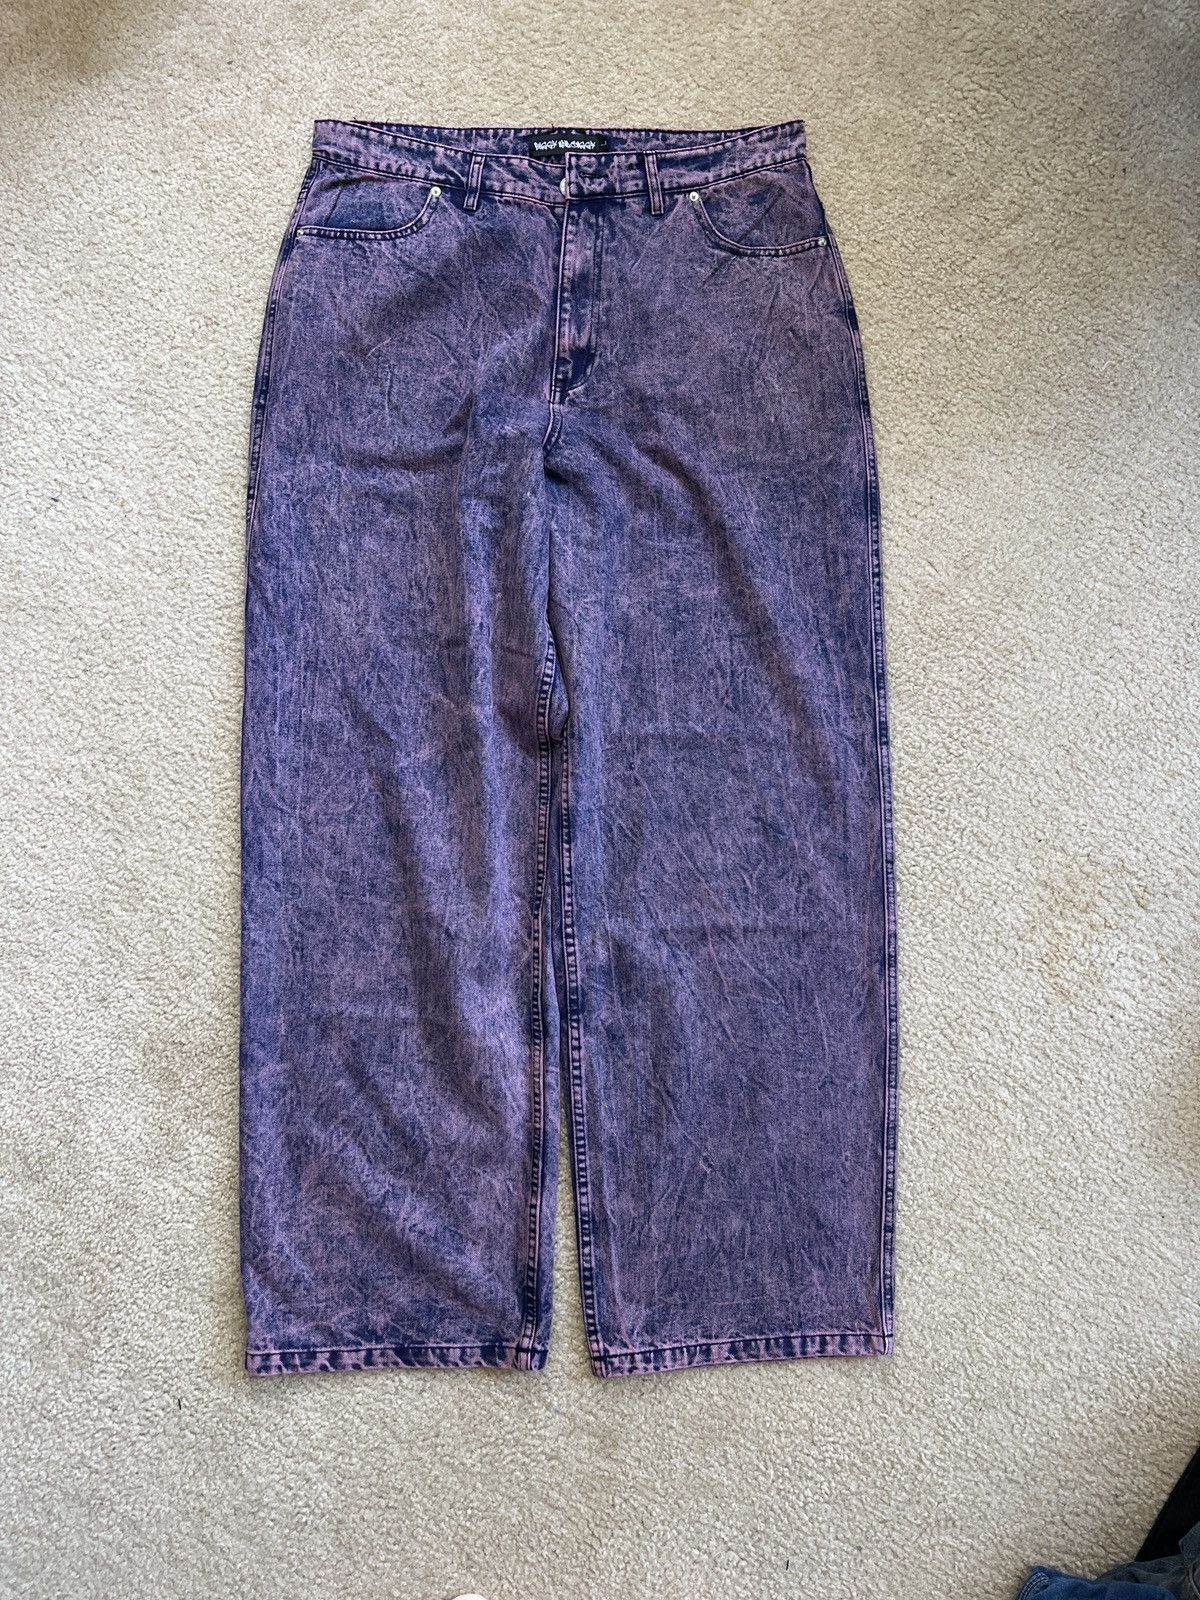 Southpole Purple Acid Wash Baggy Skater Jeans Digits | Grailed